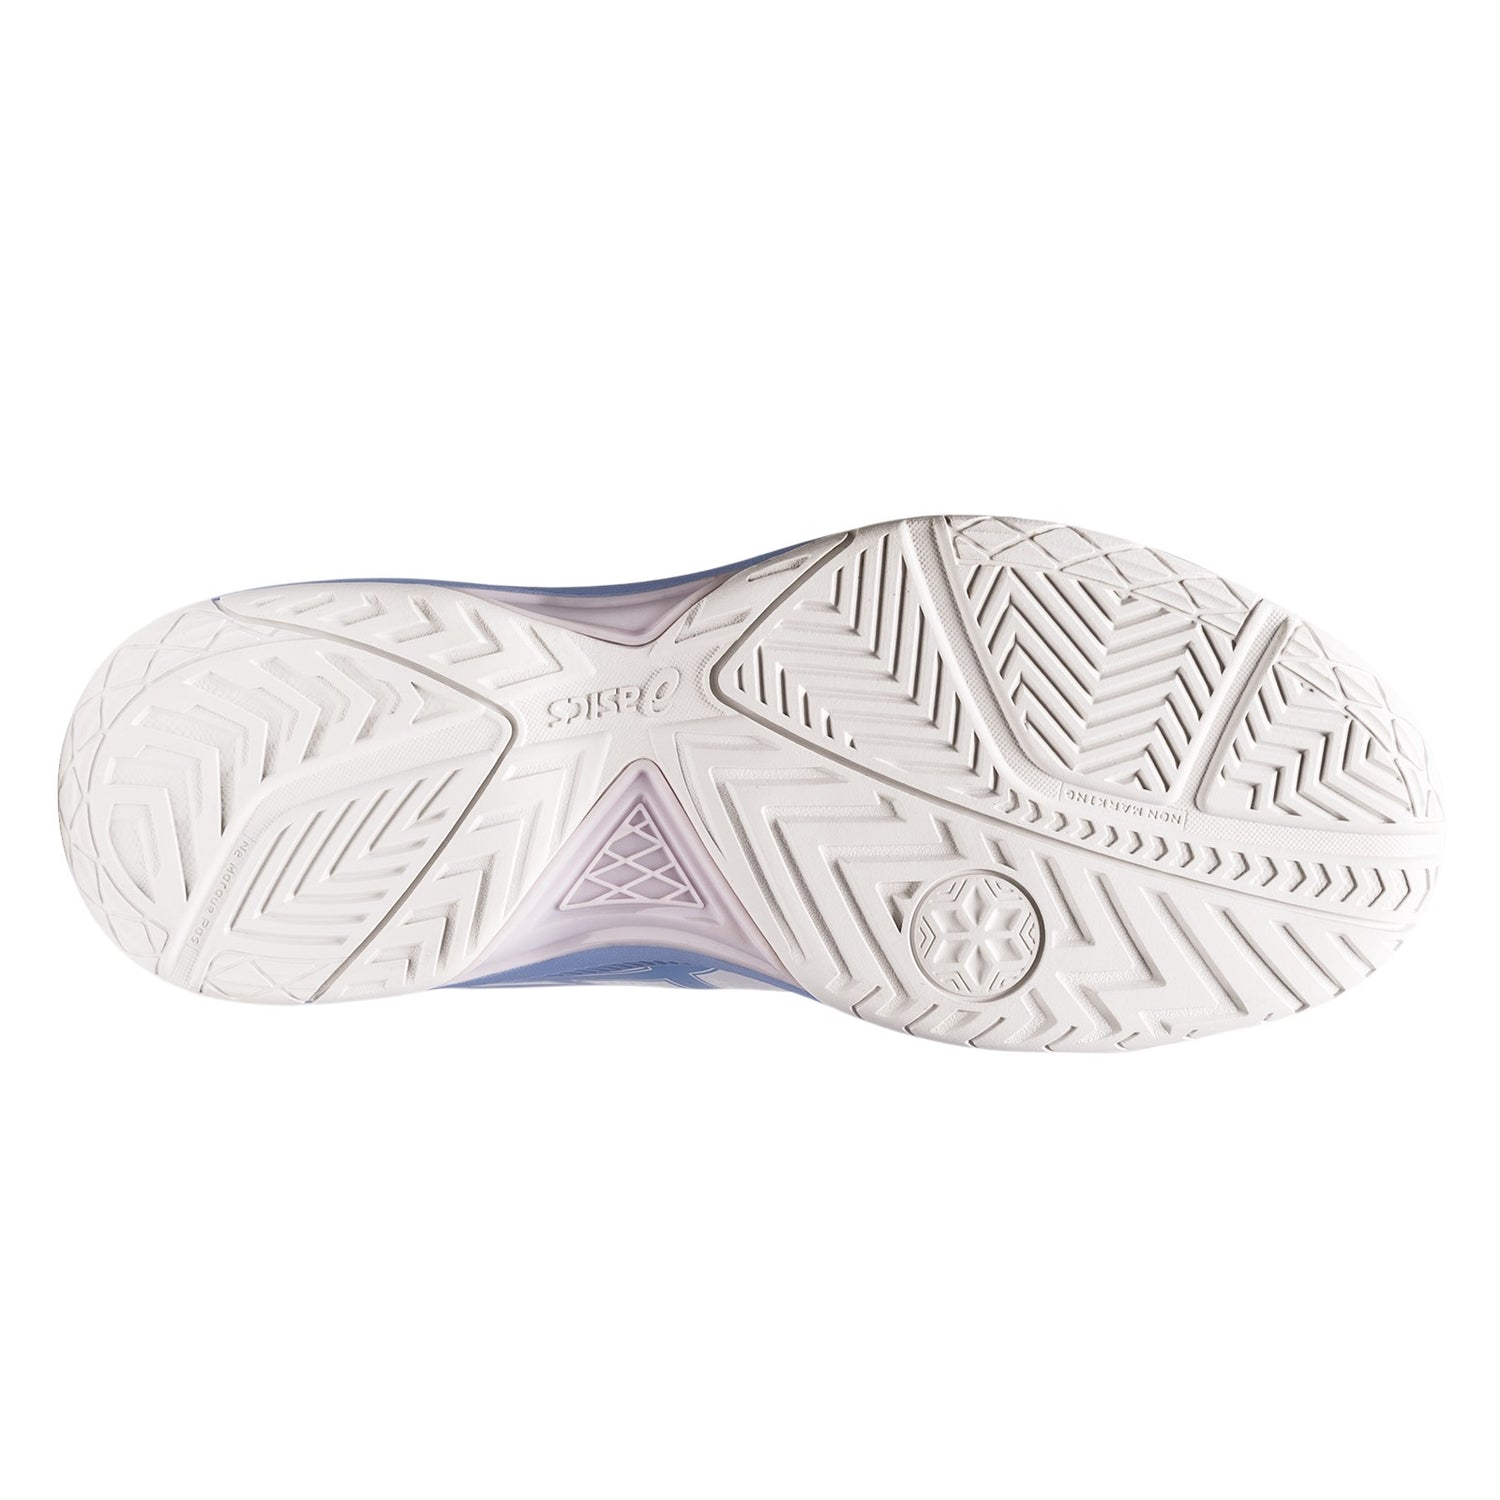 Peltz Shoes  Women's ASICS GEL-Dedicate 7 Tennis Shoe WHITE CORNFLOWER BLU 1042A167.102